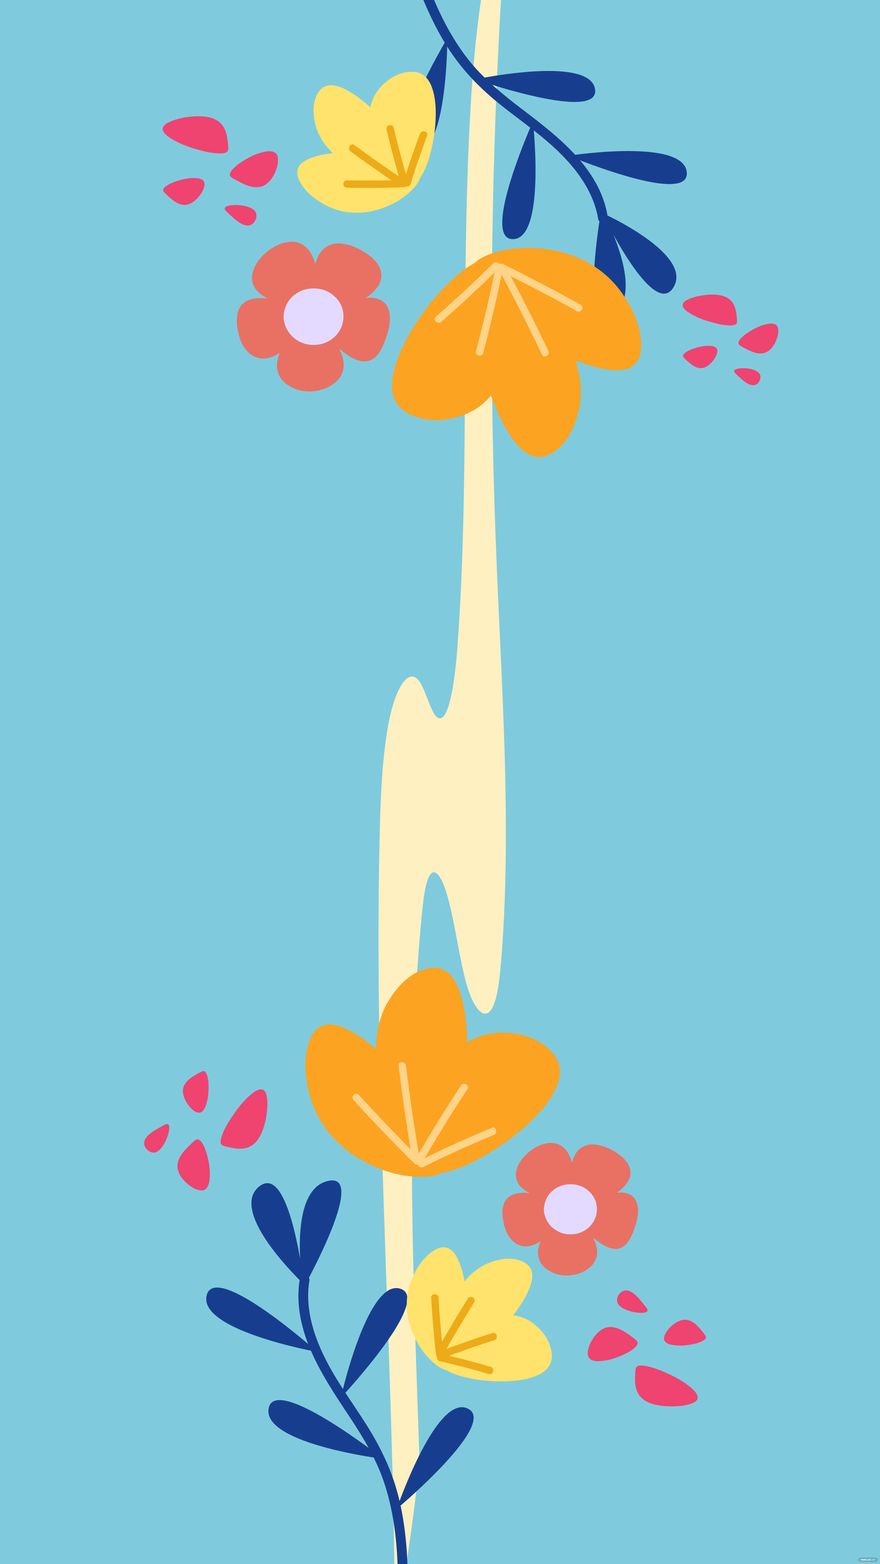 Free Iphone Flower Background in Illustrator, EPS, SVG, JPG, PNG